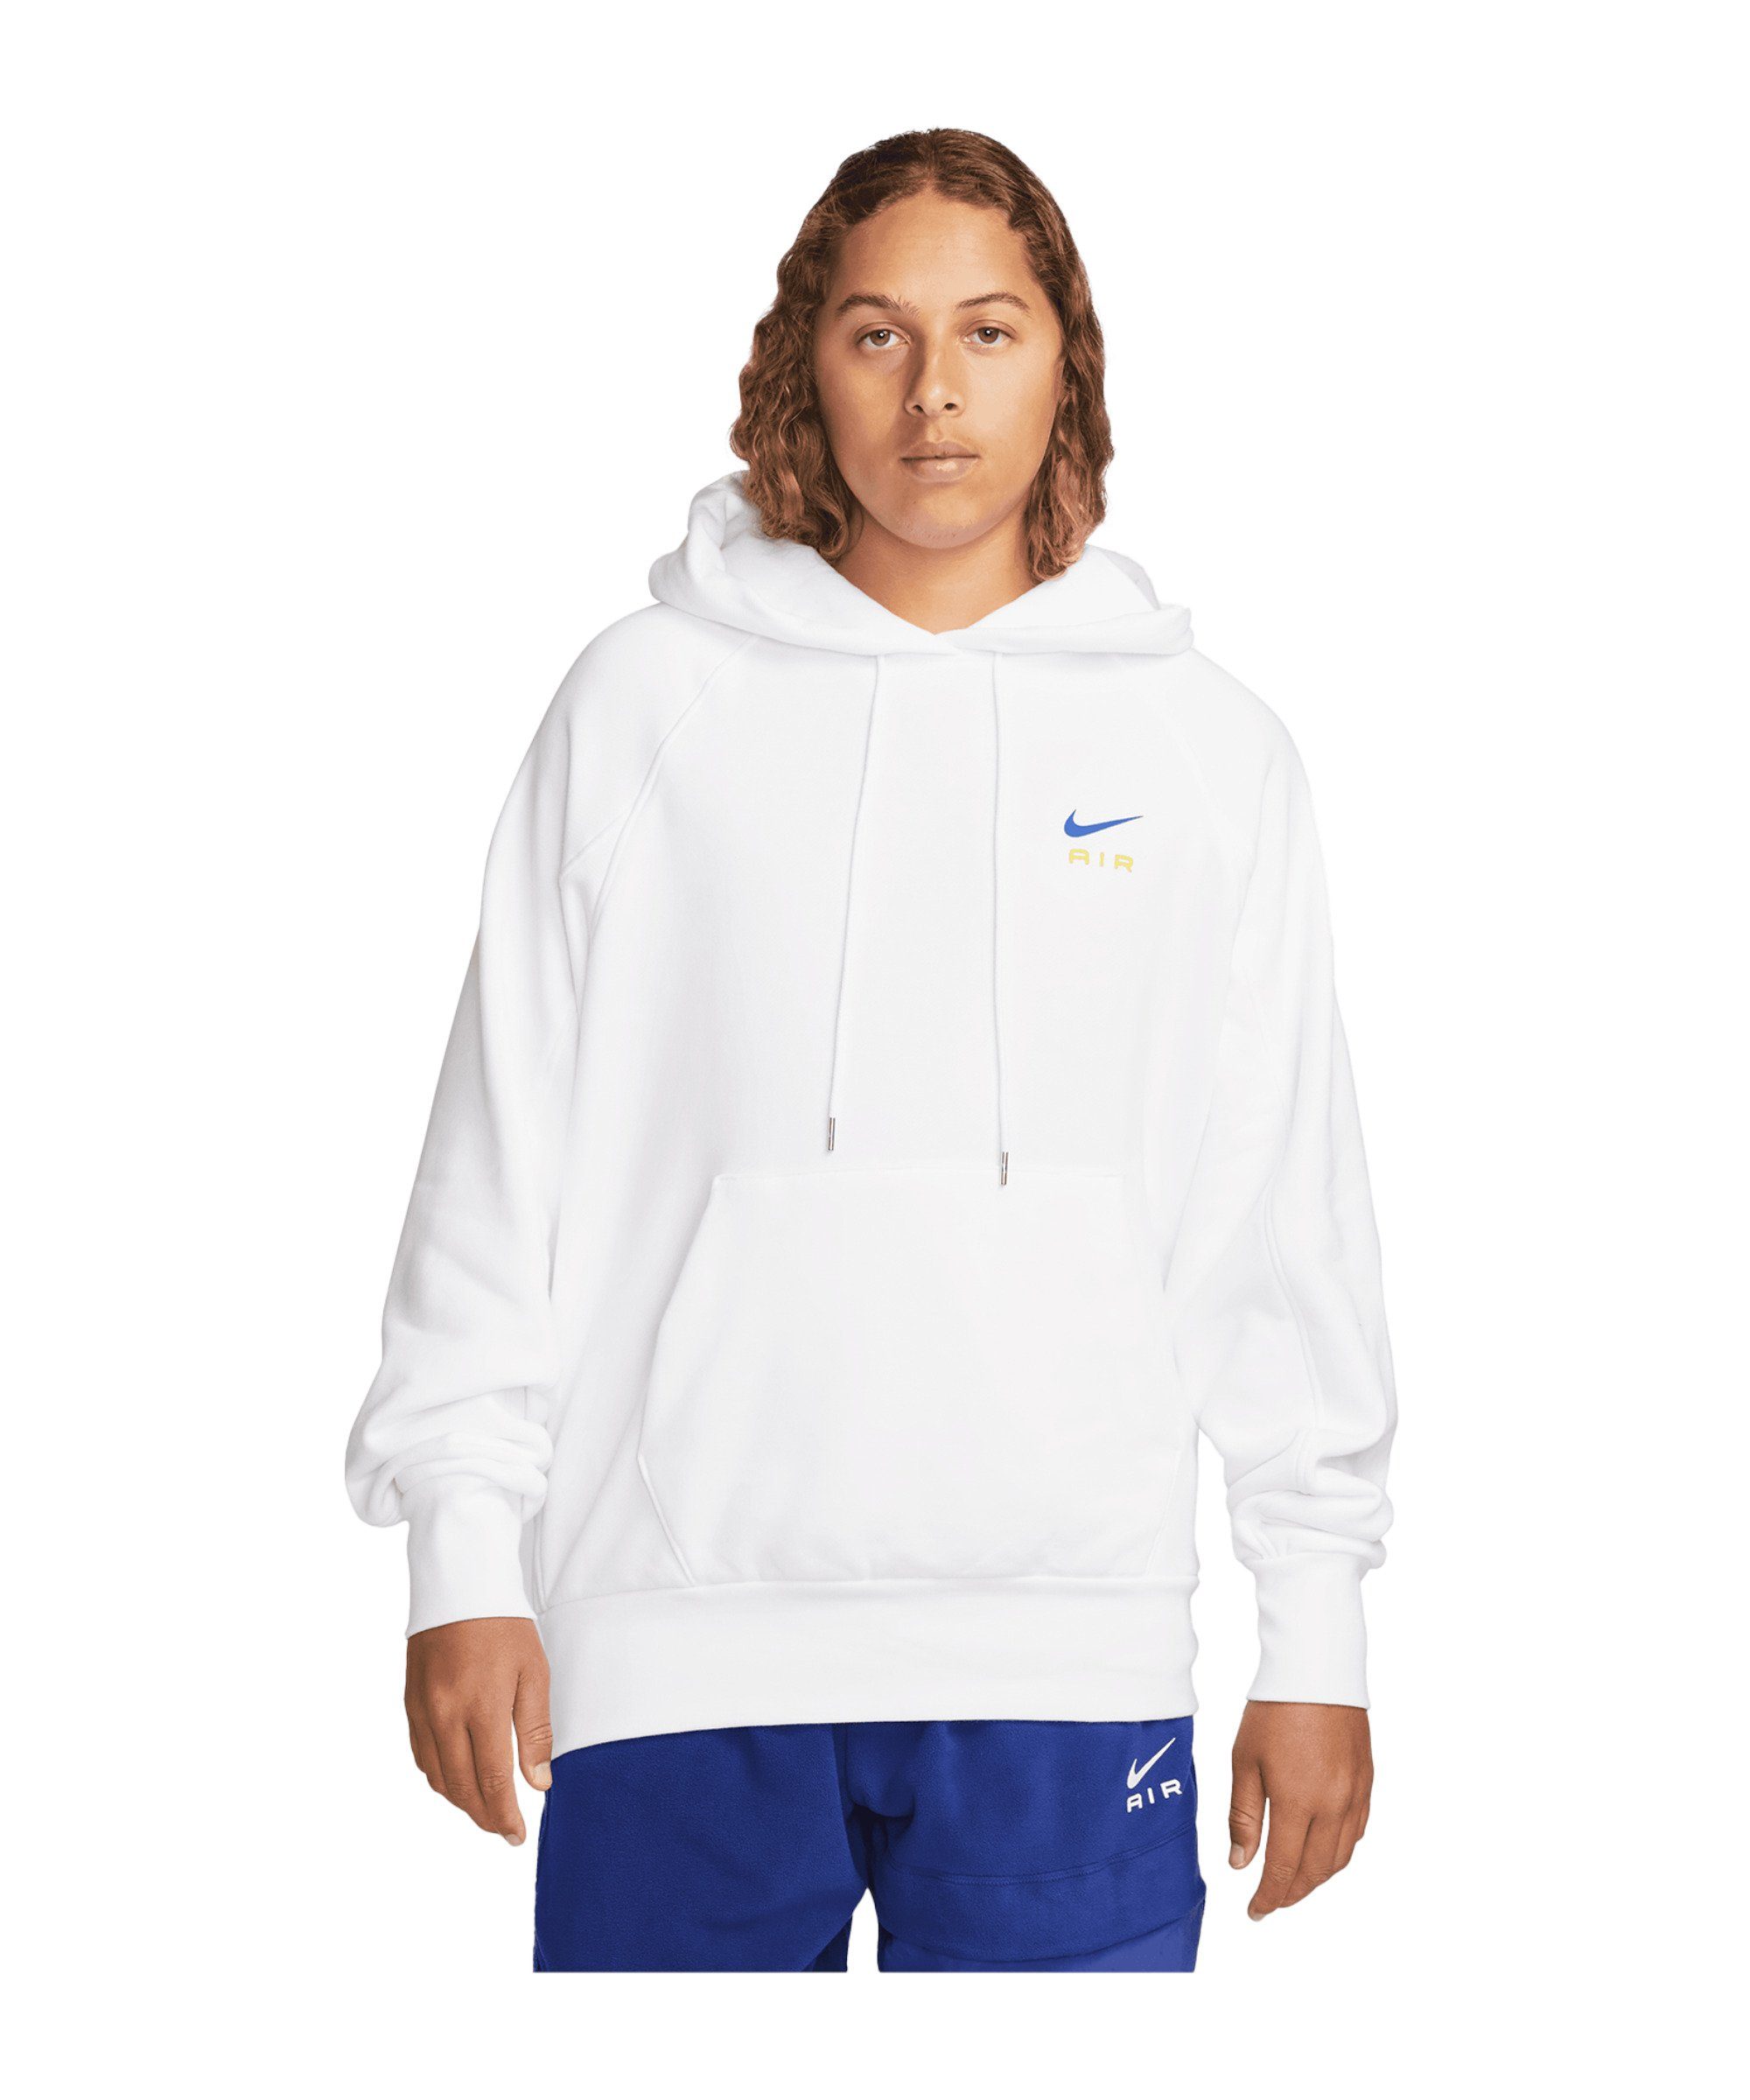 Sweatshirt FT Sportswear Air Nike Hoody weissgelb